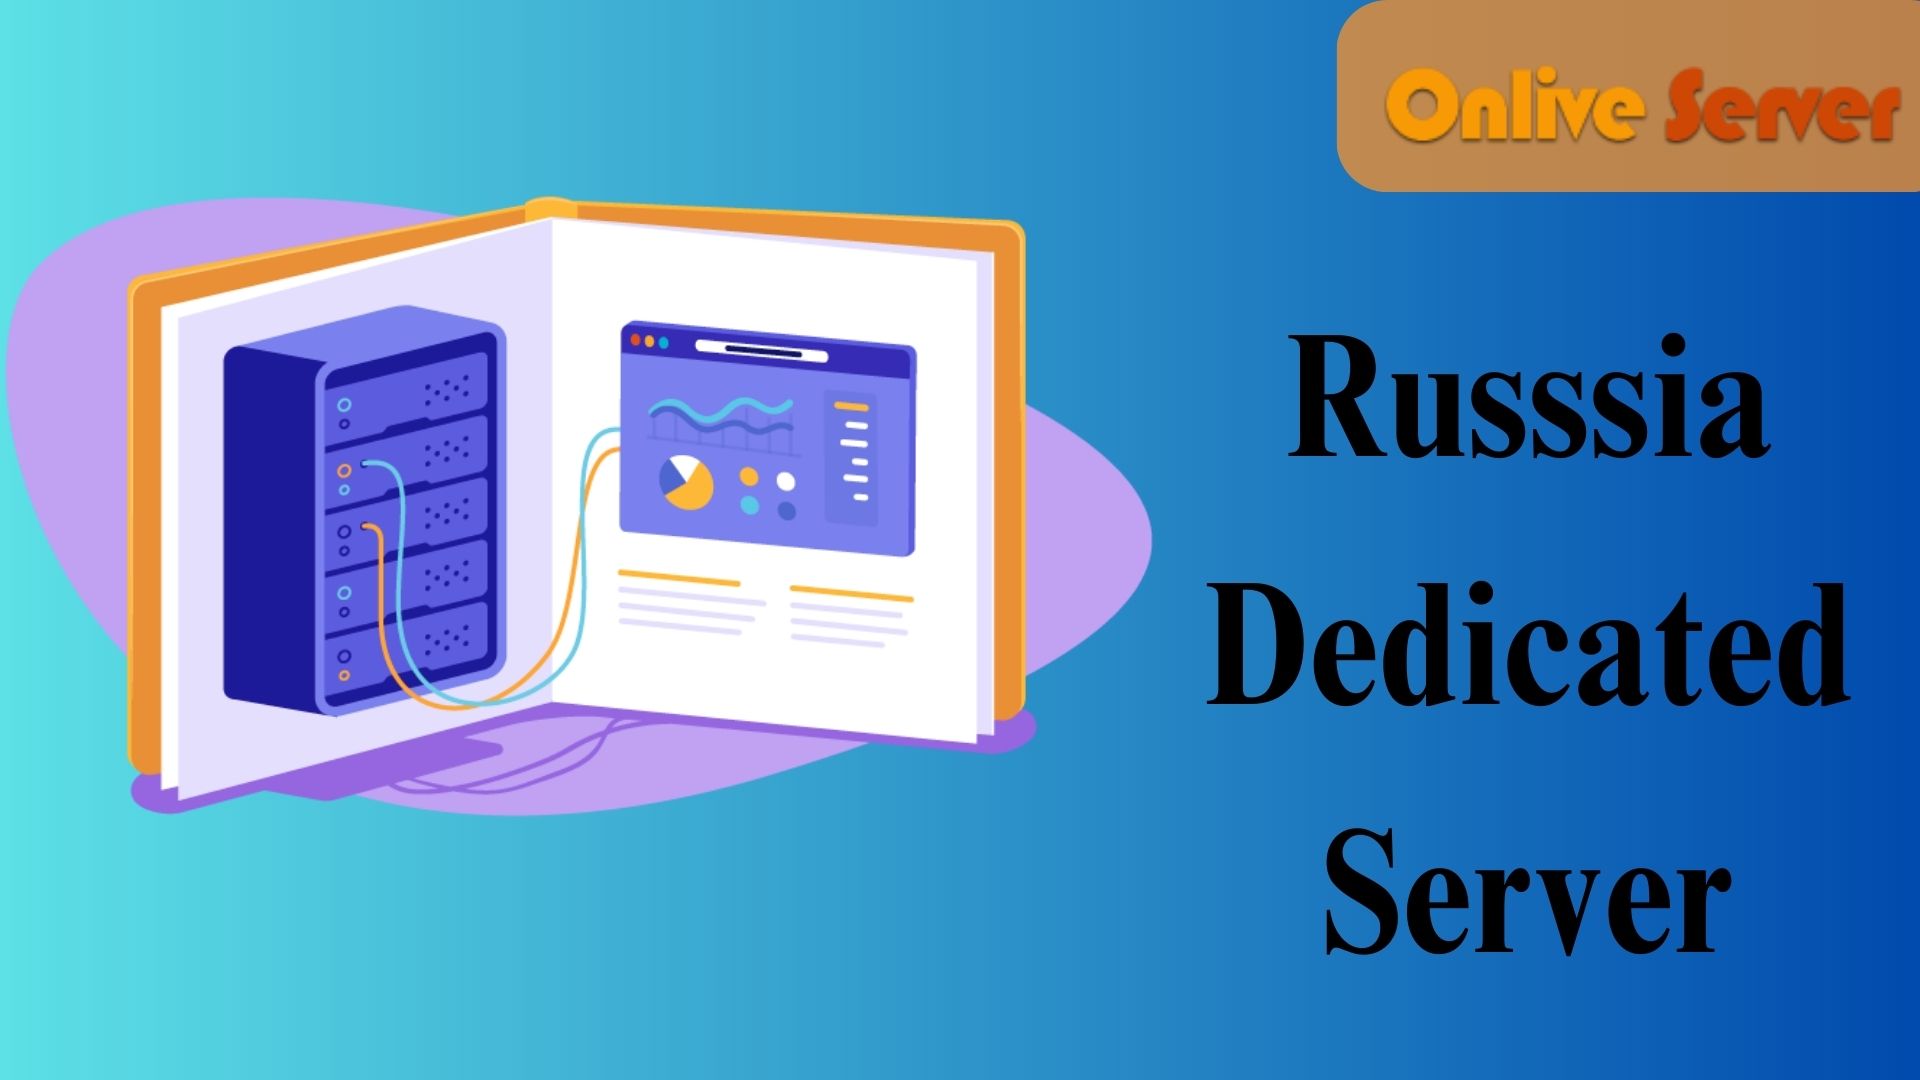 Russsia Dedicated Server